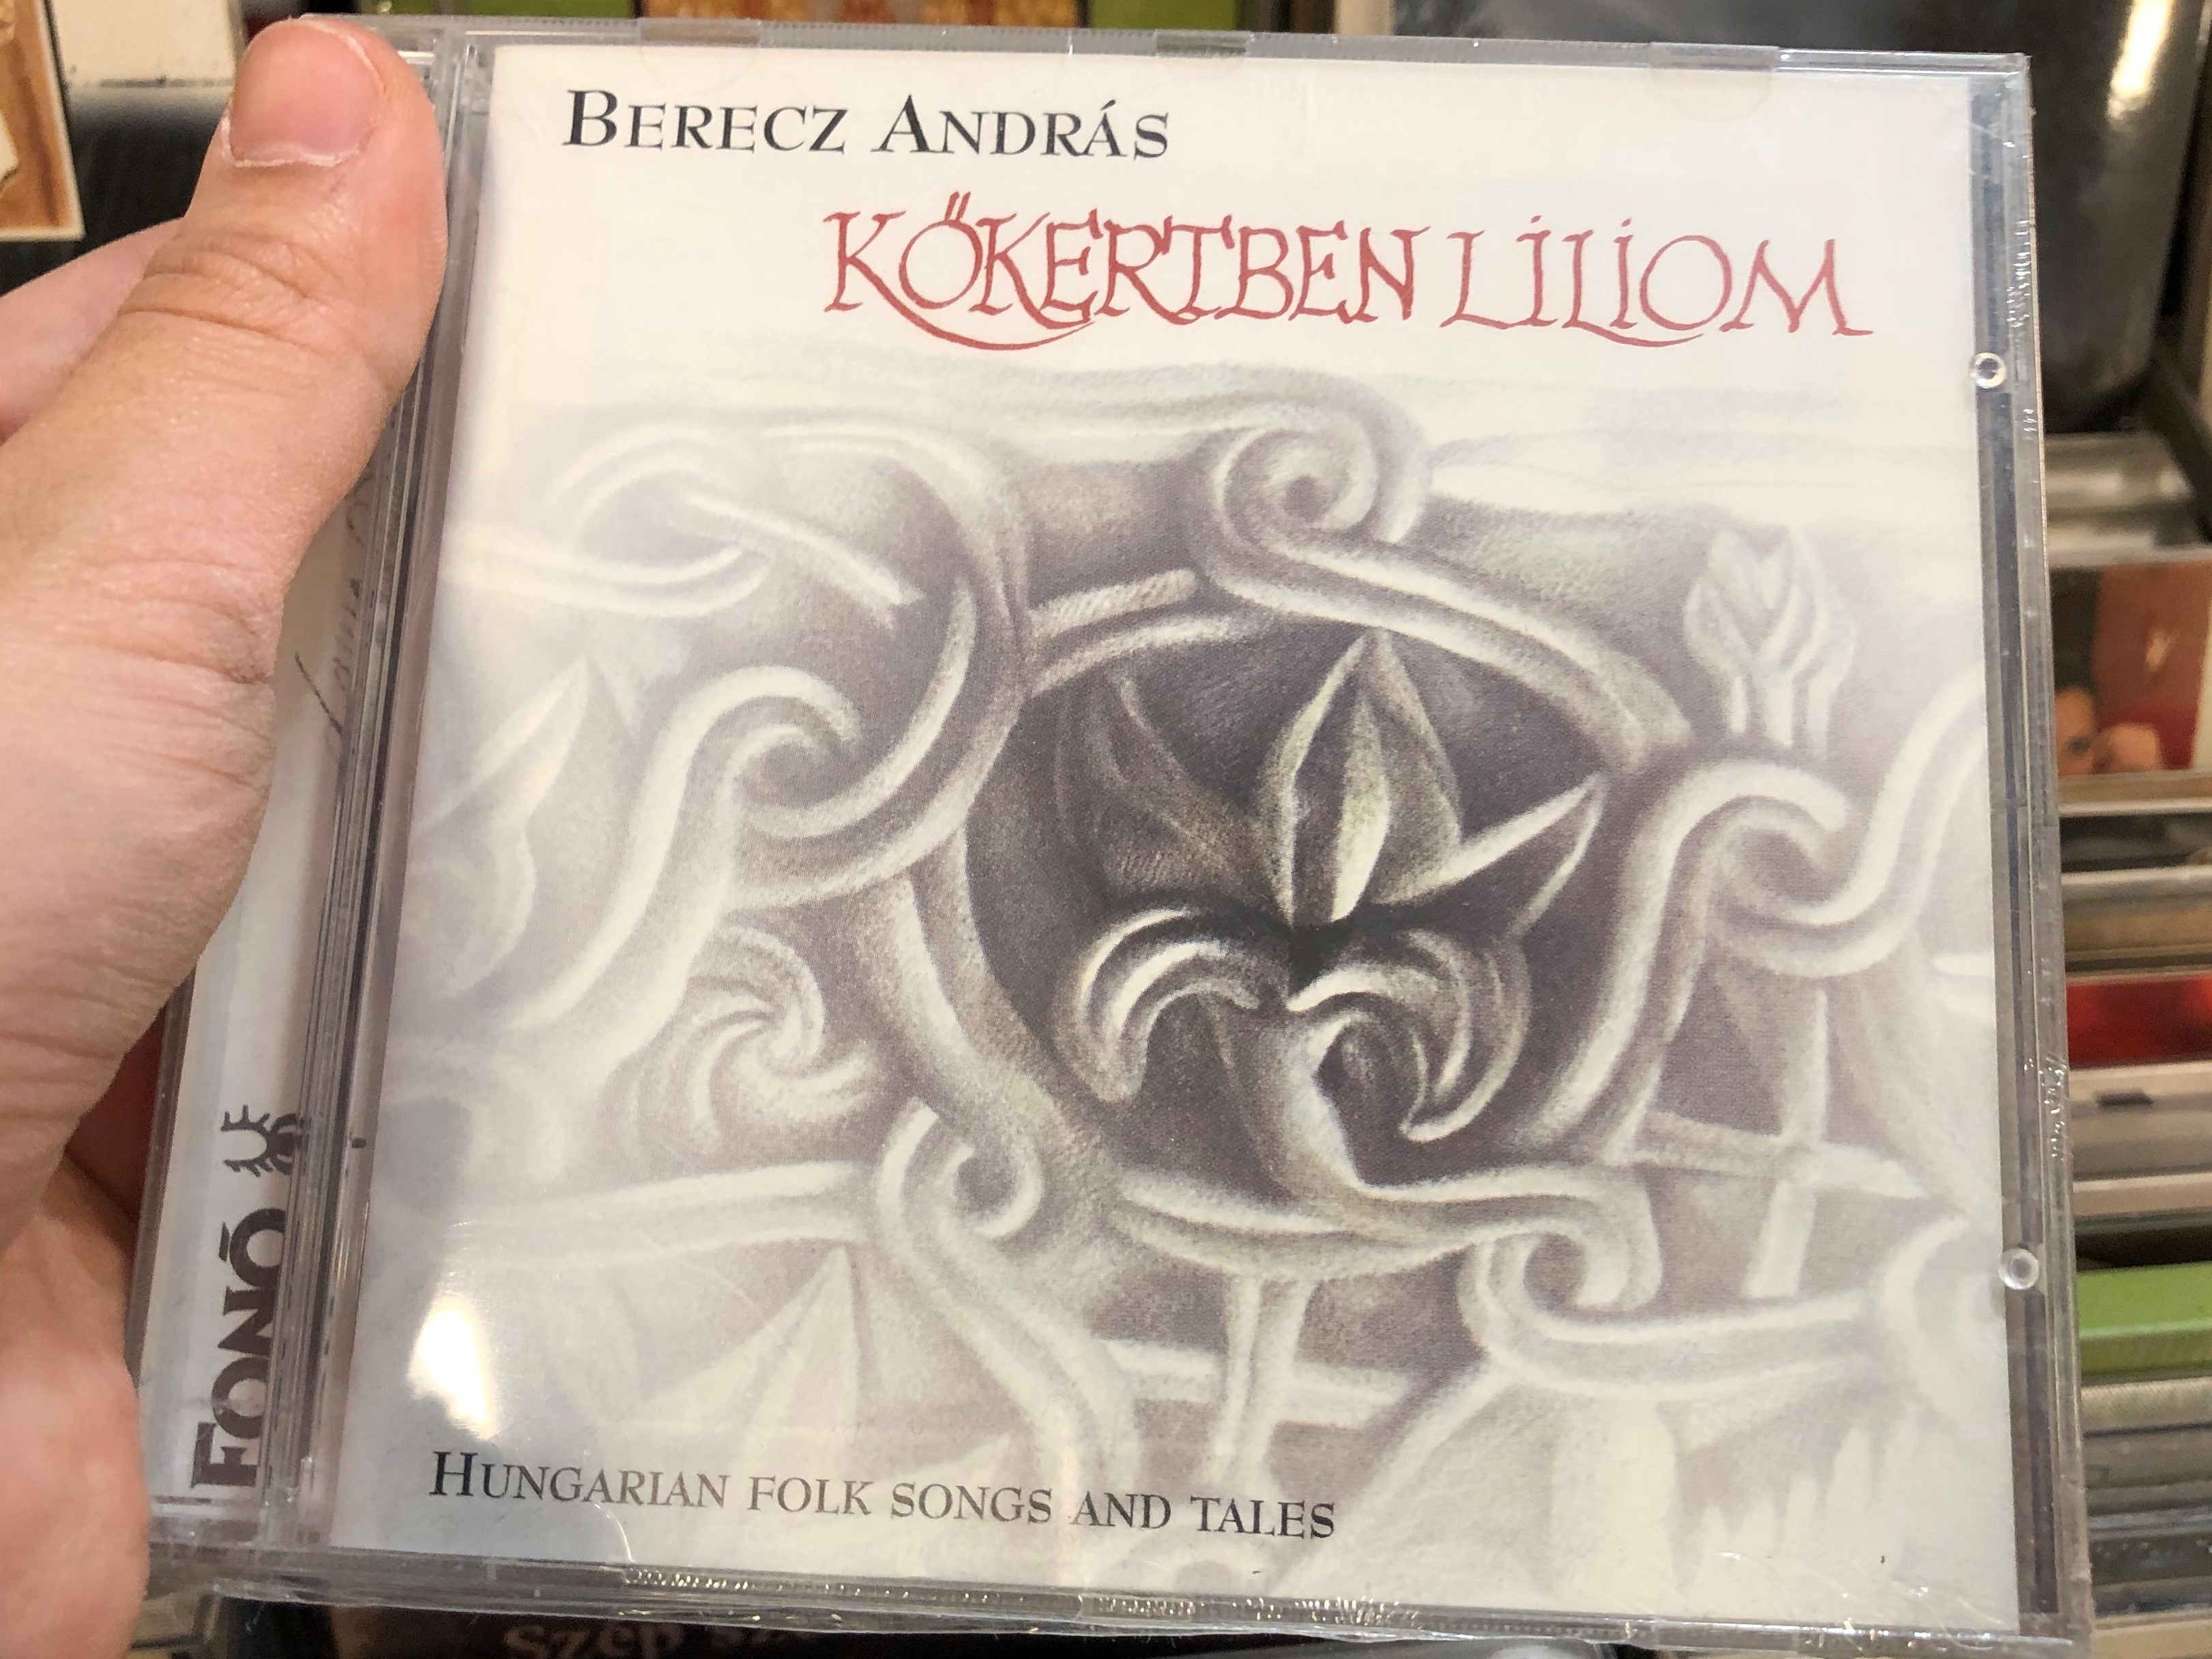 berecz-andr-s-k-kertben-liliom-hungarian-folk-songs-and-tales-fon-records-audio-cd-2000-fa-902-2-1-.jpg